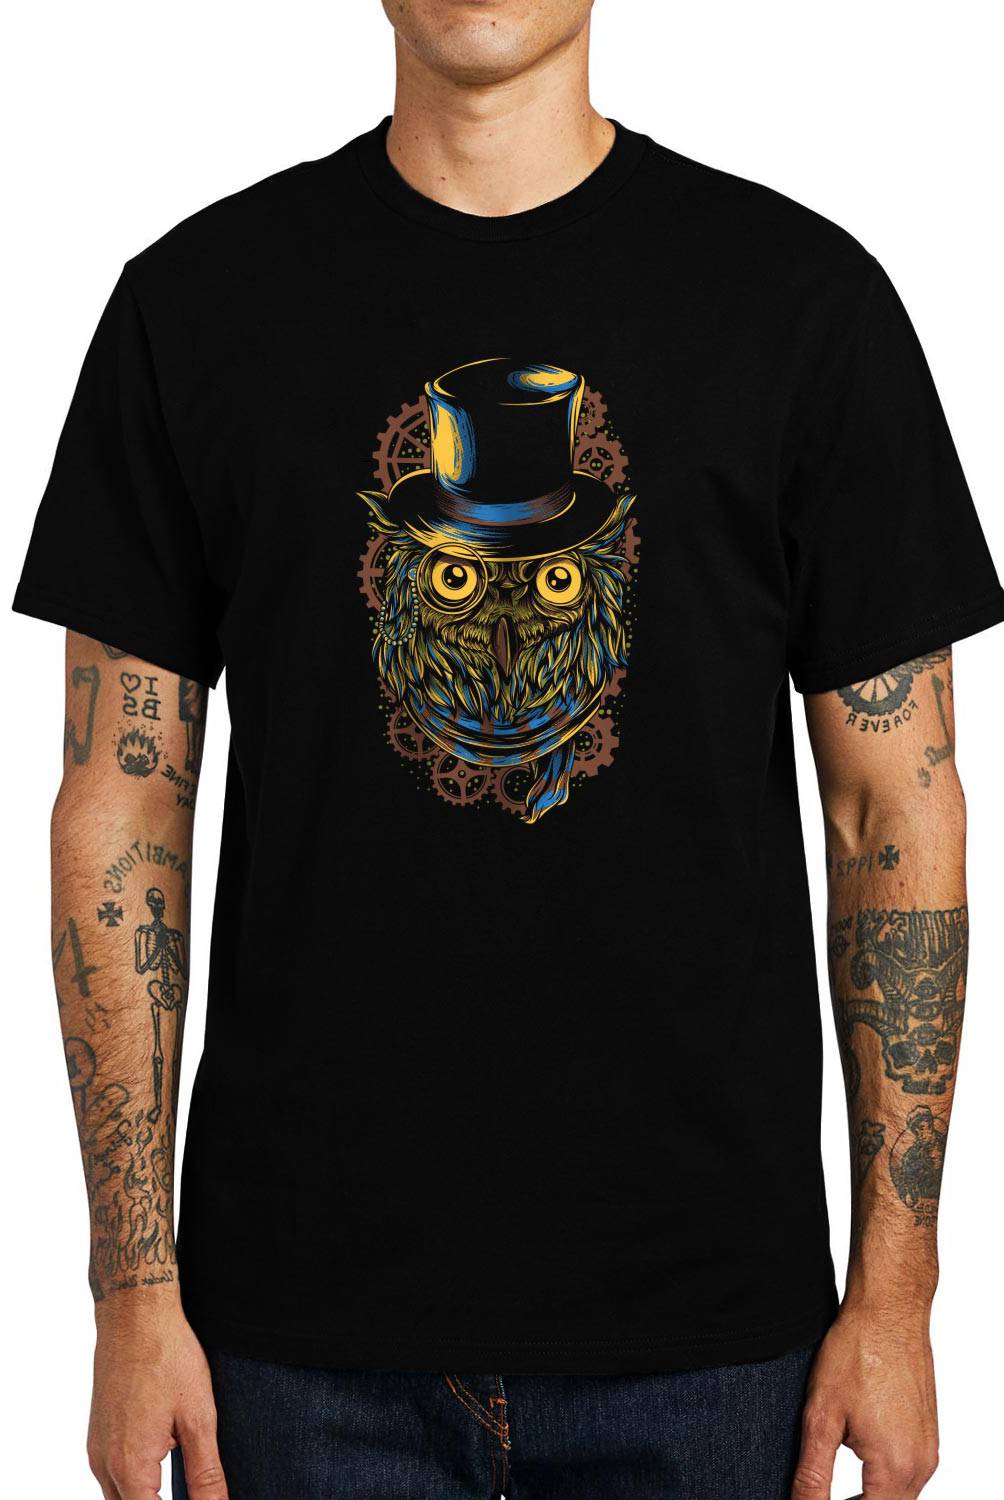 GET OUT - Polera Steampunk Owl